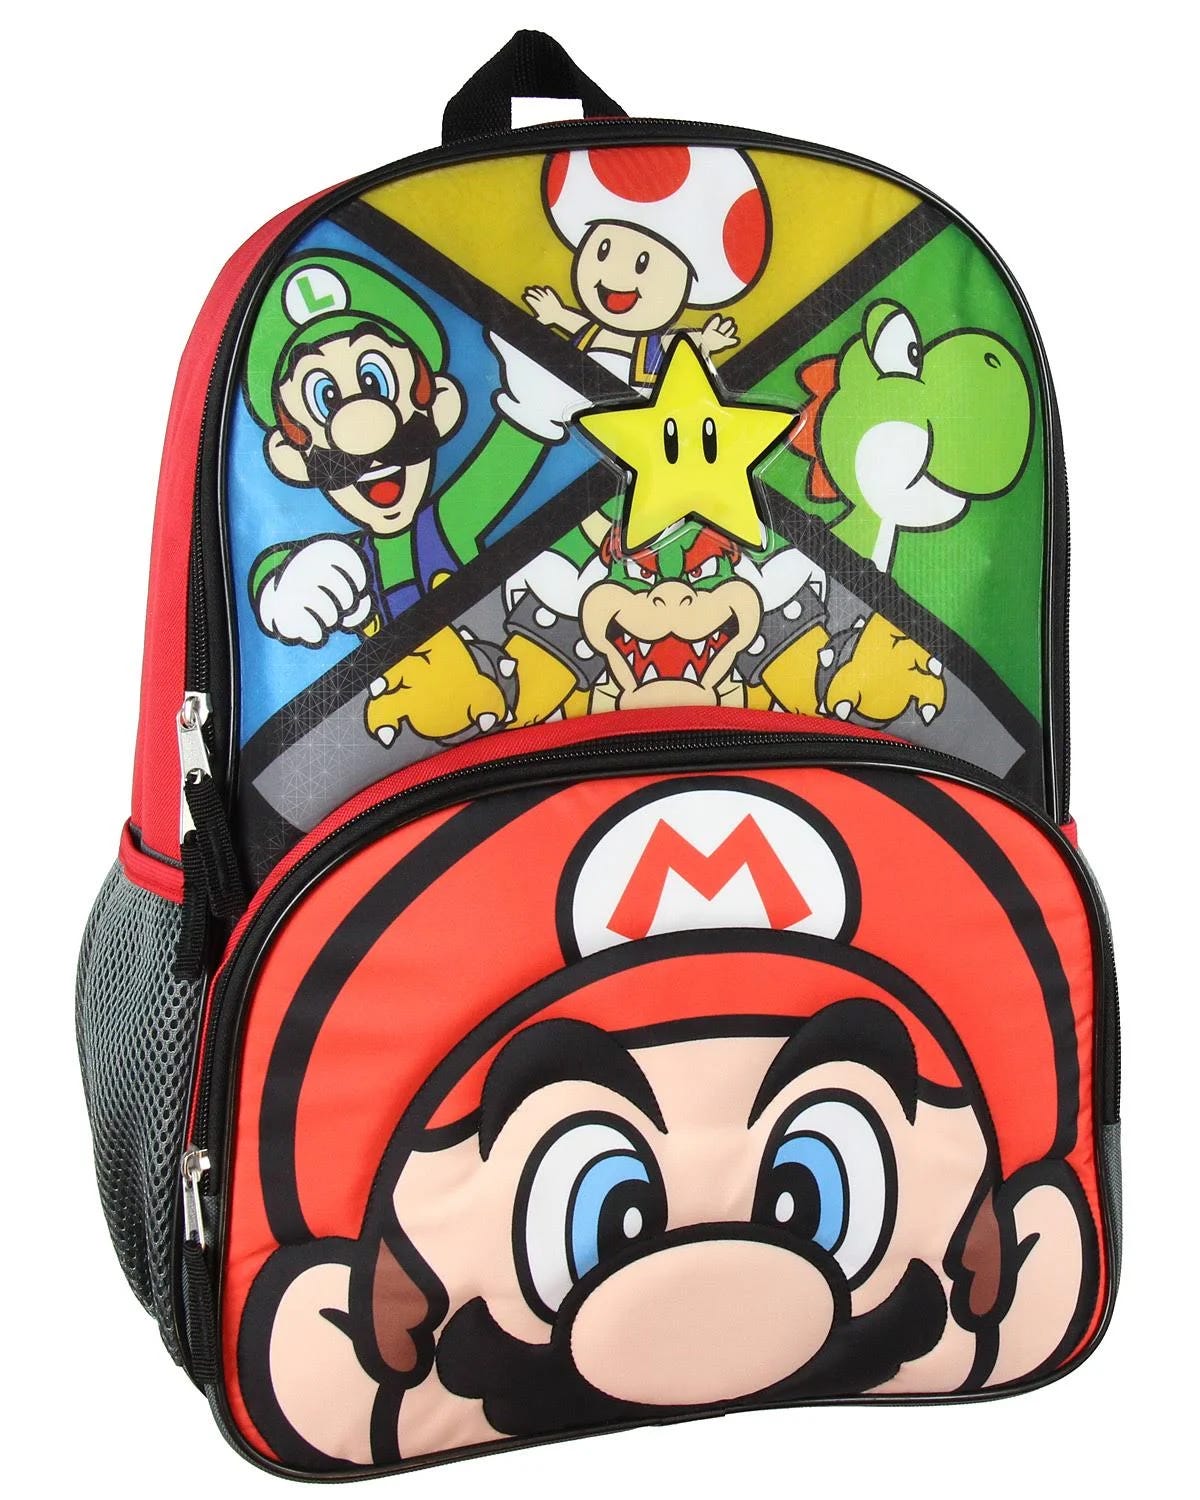 Officially Licensed Super Mario LED Lights Backpack | Image